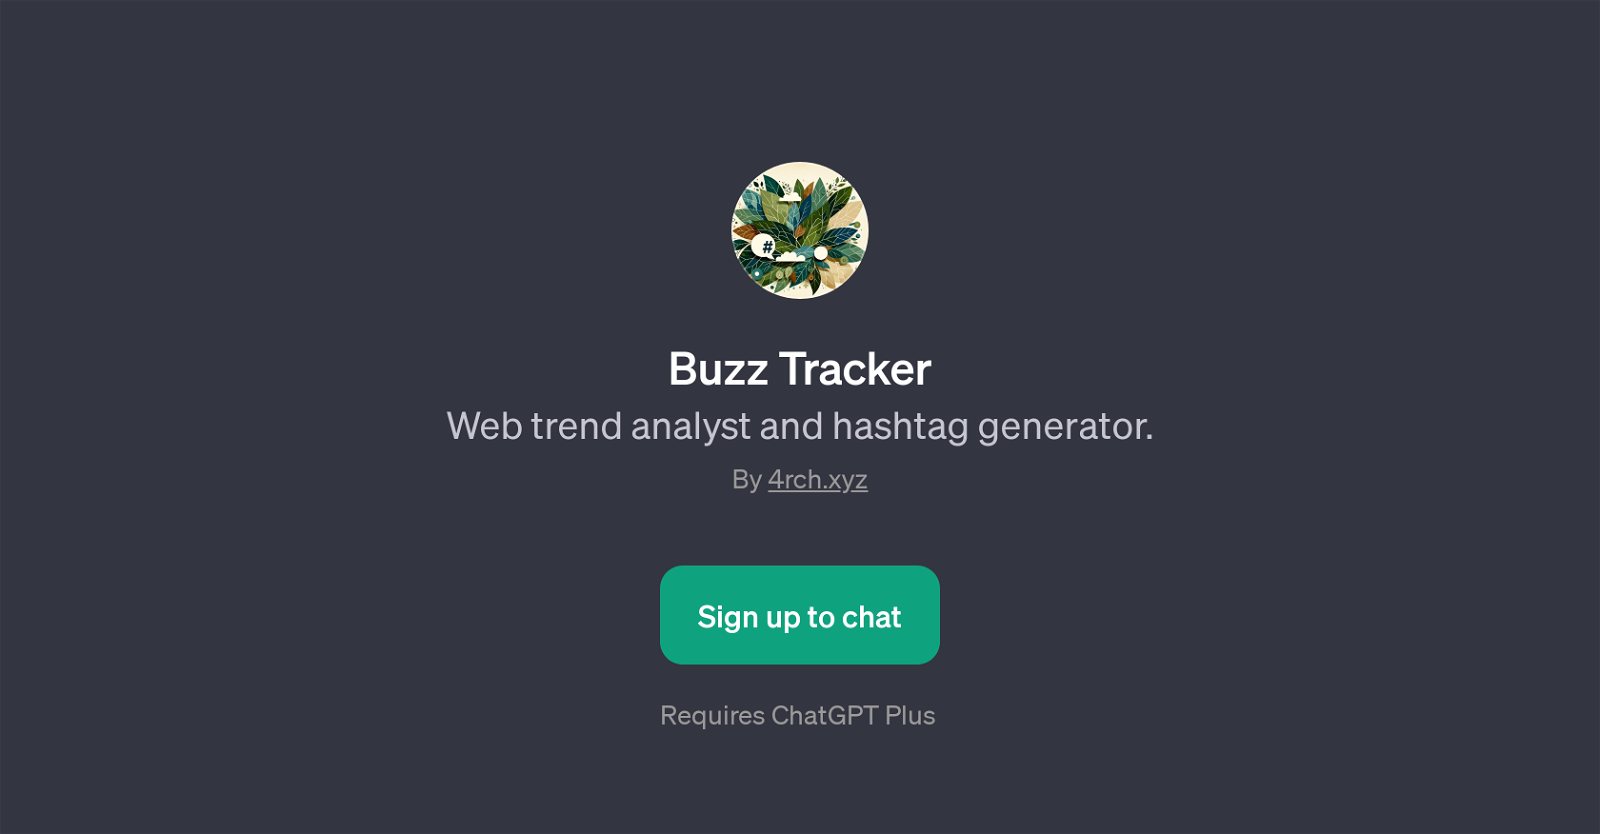 Buzz Tracker website